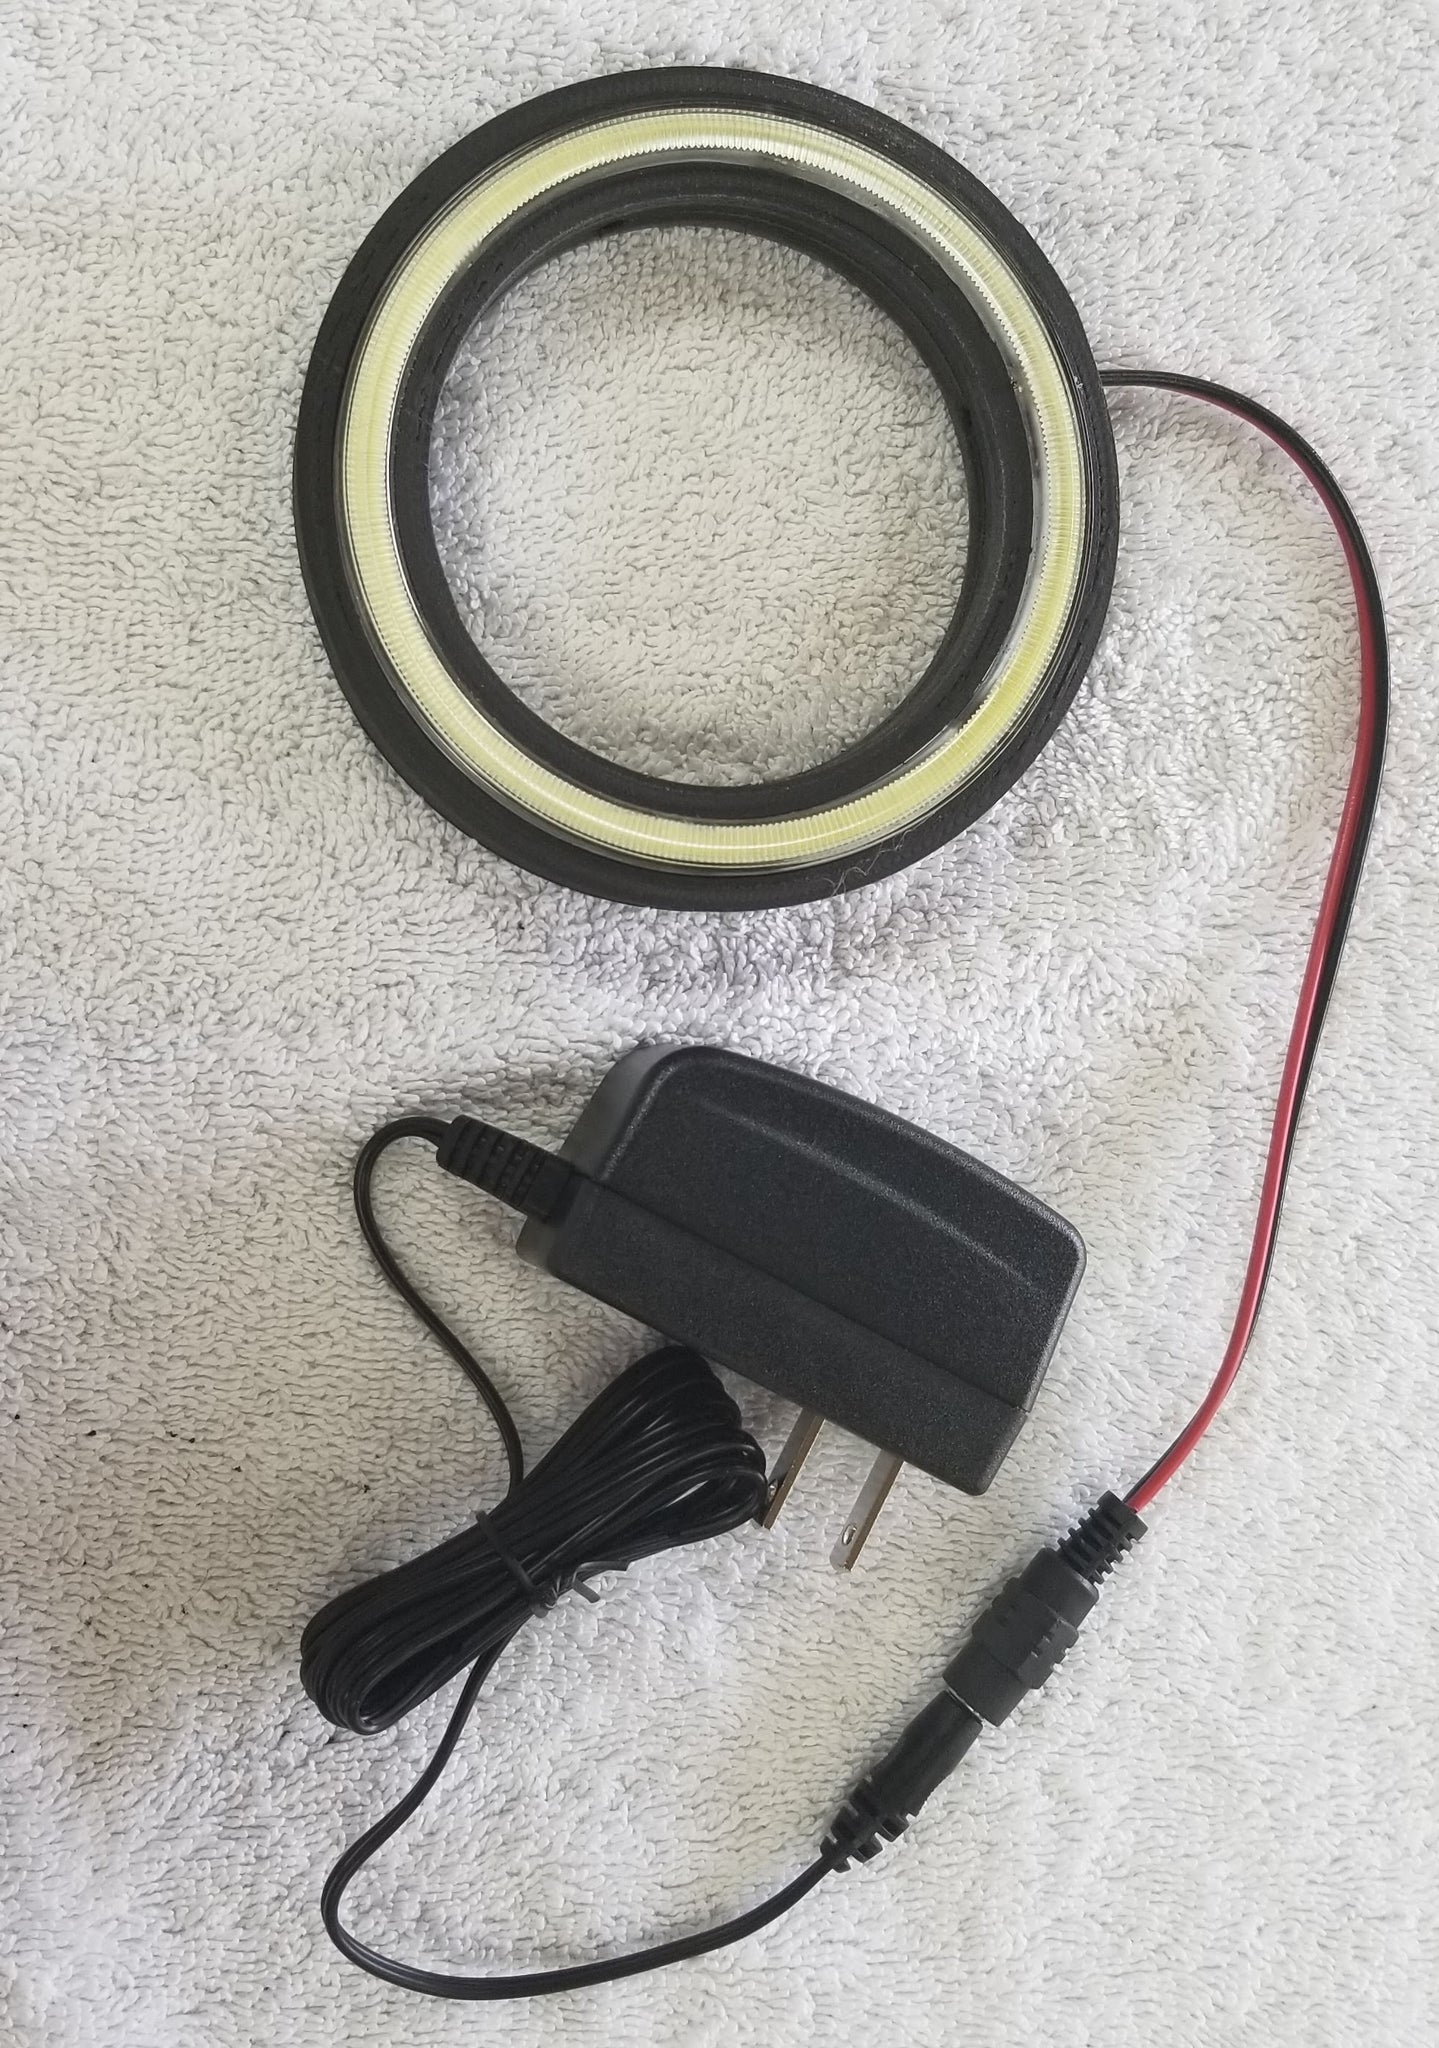 ProCutCNC G0704 PM-25 BF-20 Mill Spindle LED Light Ring –